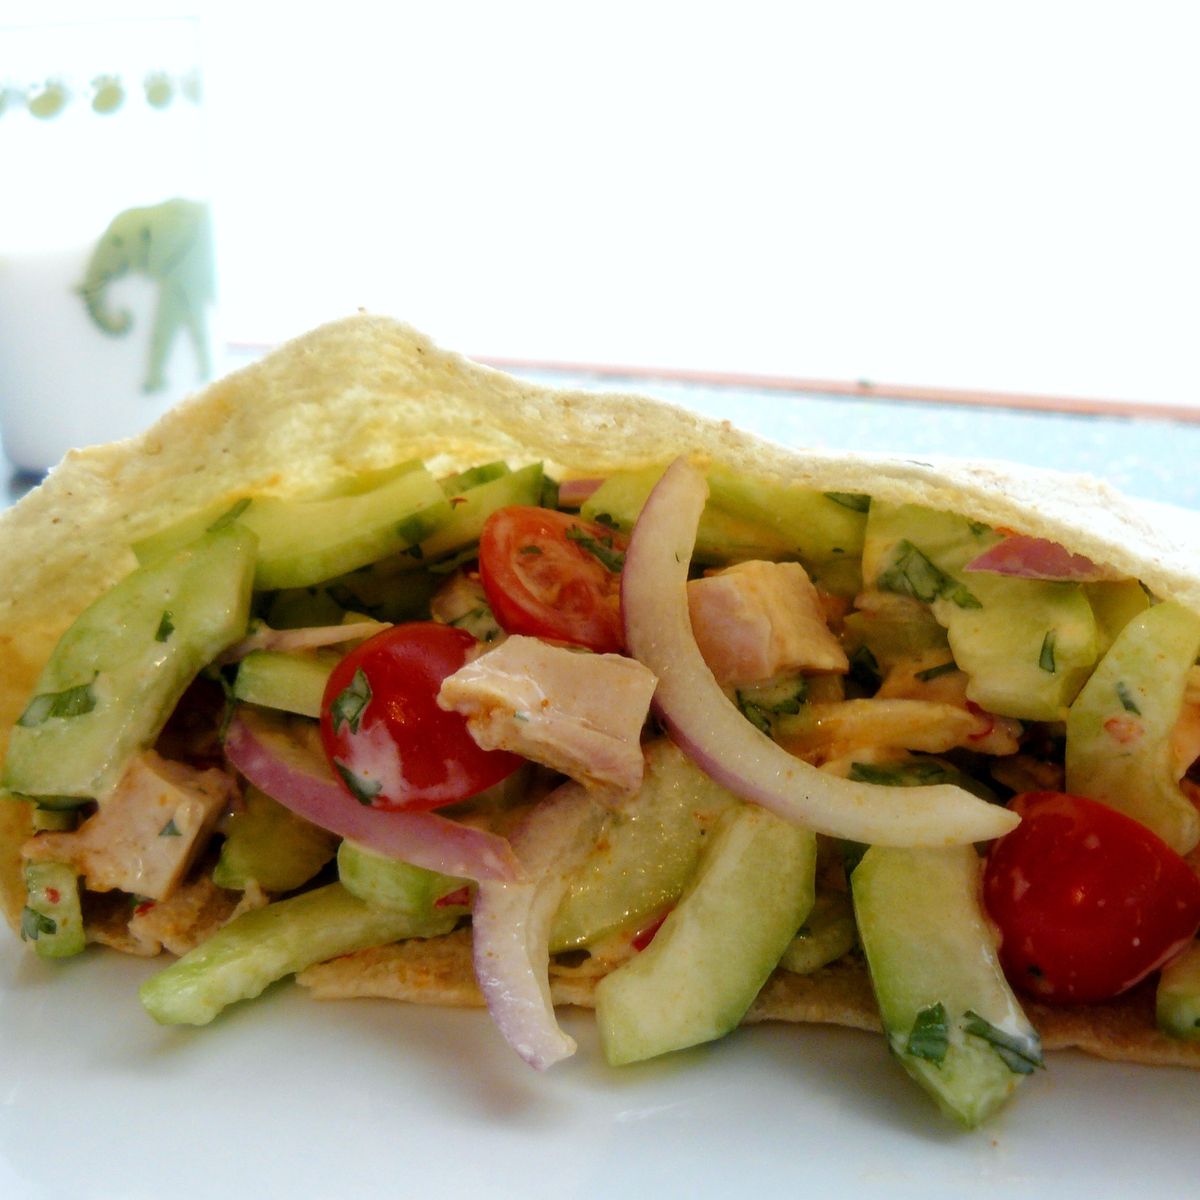 Grilled Chicken And Harrisa Yogurt Salad Pita Pocket Recipe On Food52